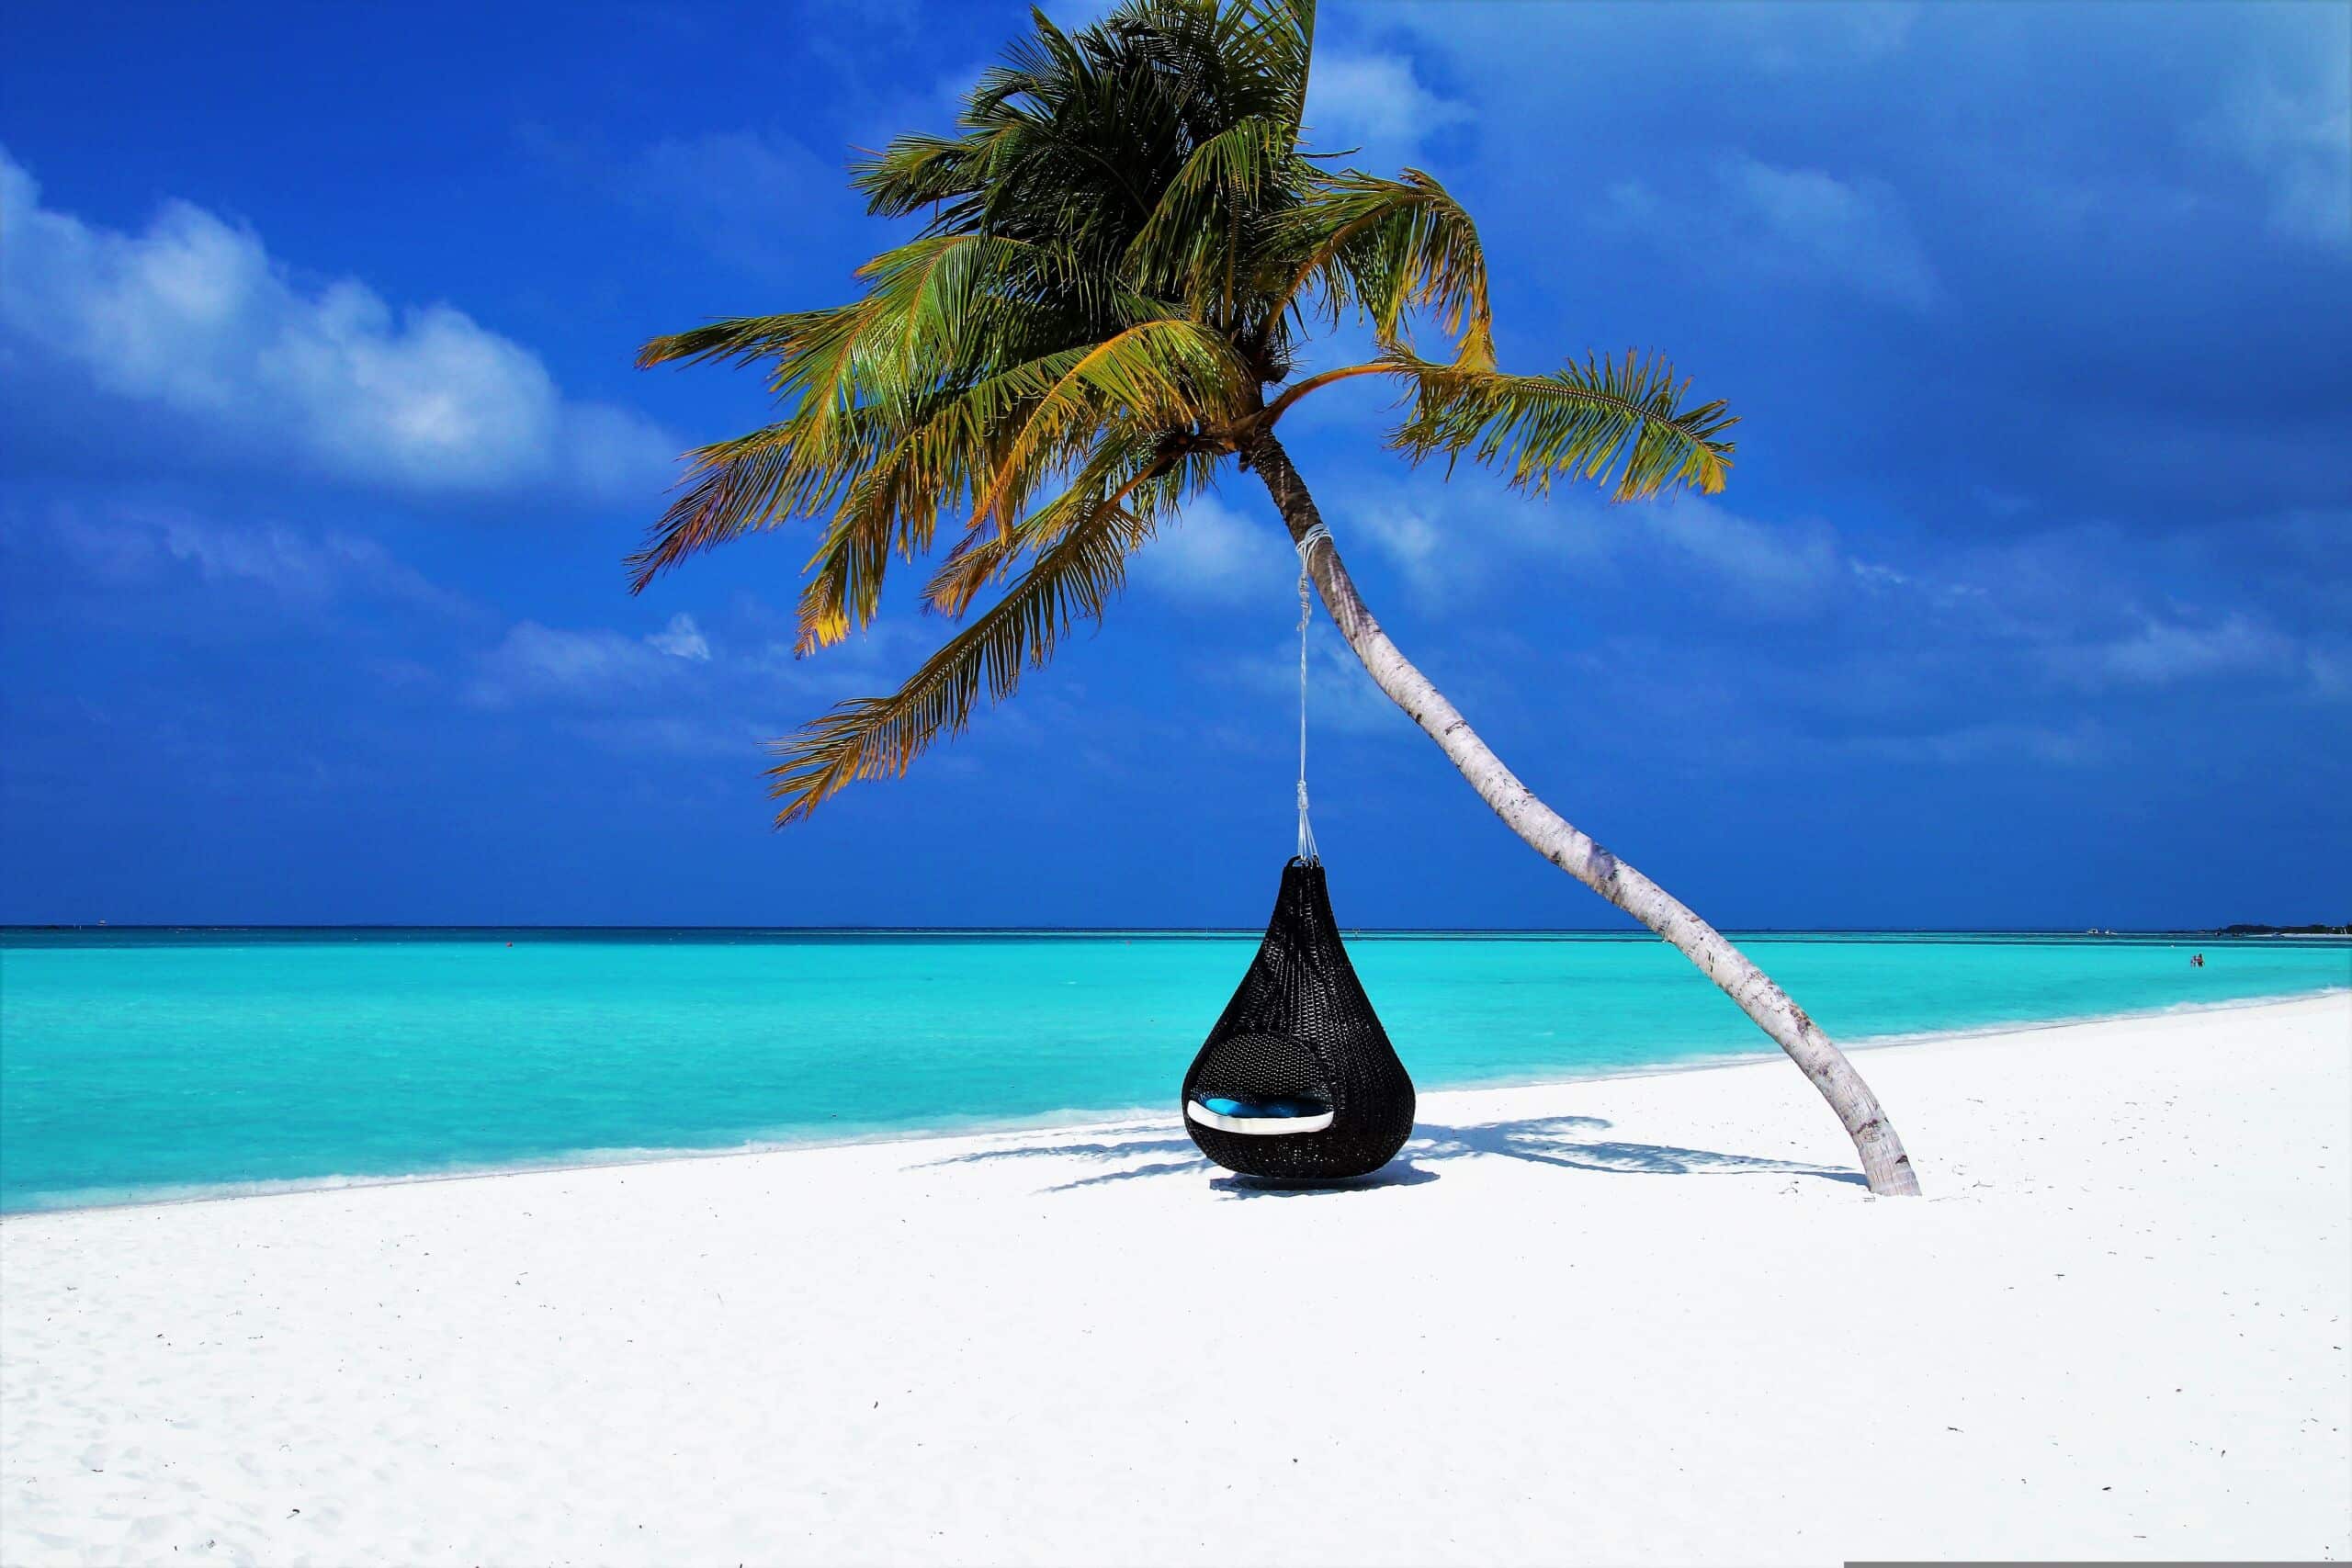 maldives travel